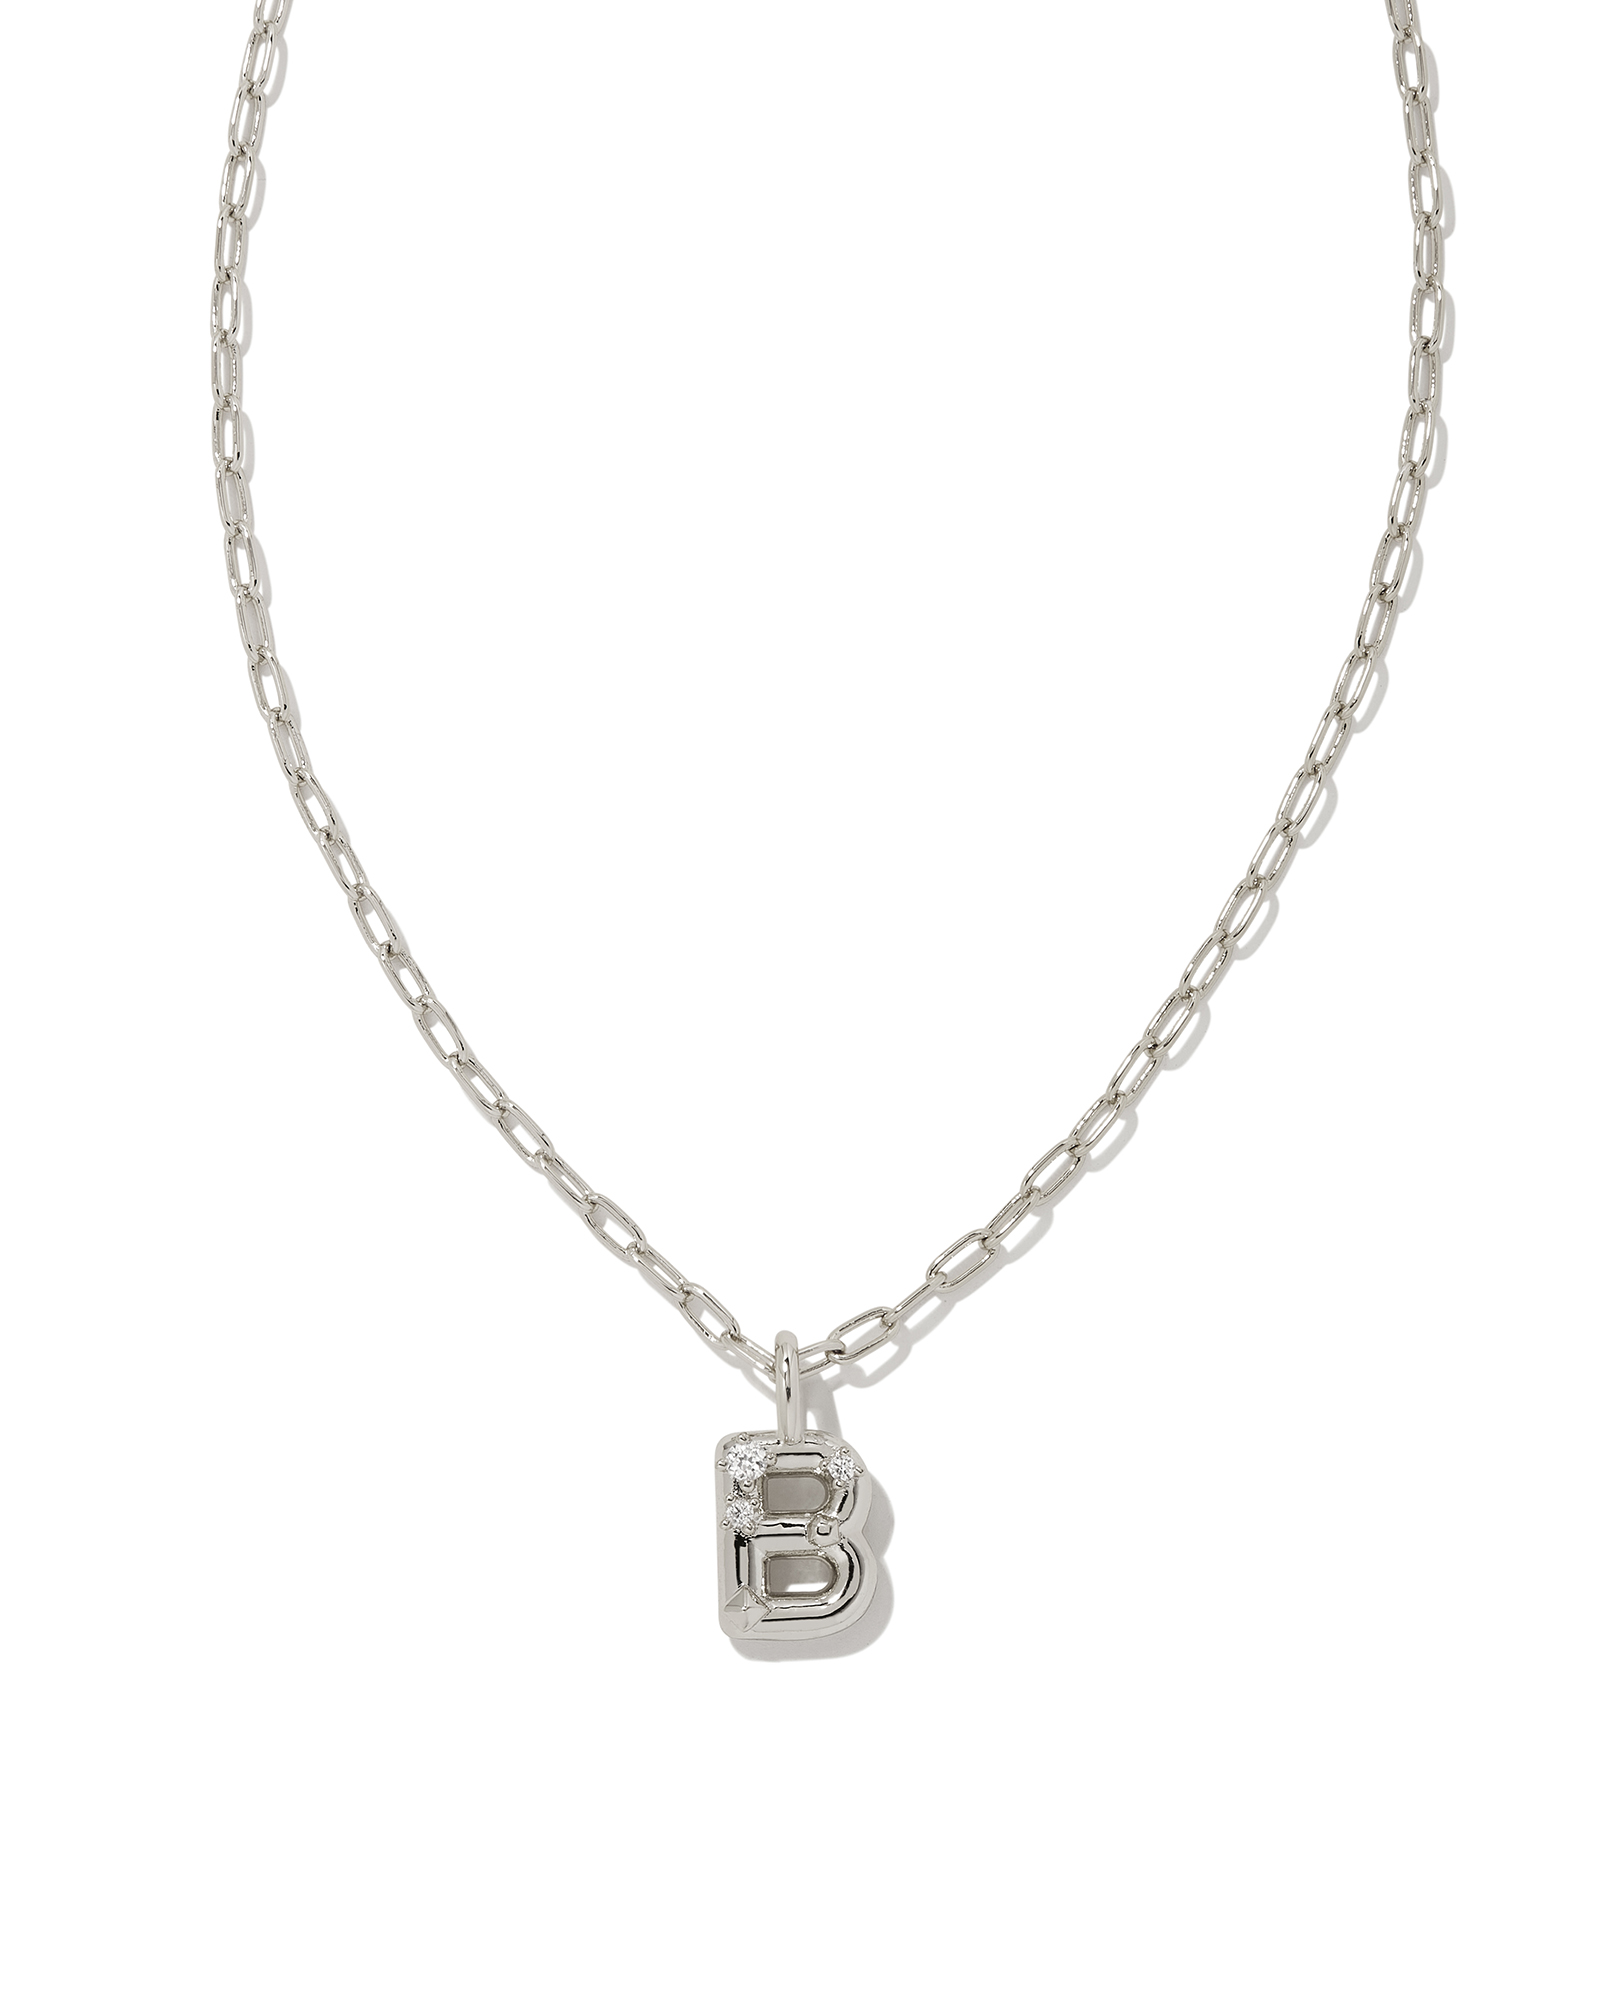 Buy Artisan Crafted Polki Diamond Pendant Necklace, Initial B Pendant  Necklace, 20 Inch Necklace in Platinum Over Sterling Silver, Polki Diamond  Jewelry 0.50 ctw at ShopLC.